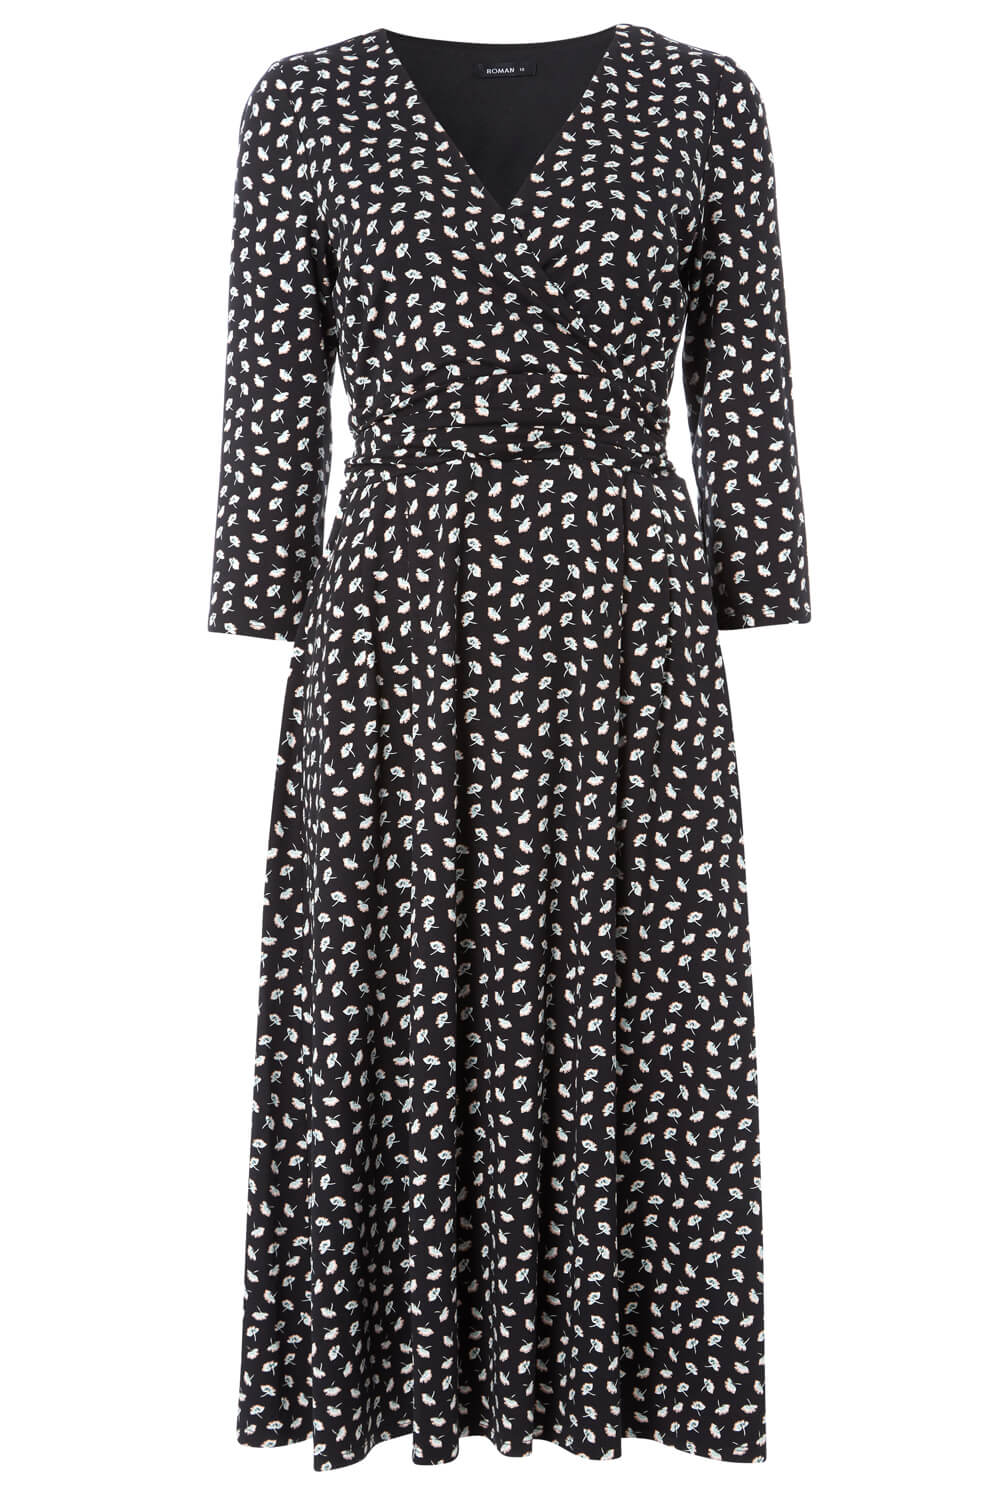 Black Floral Wrap Jersey Midi Dress, Image 5 of 5